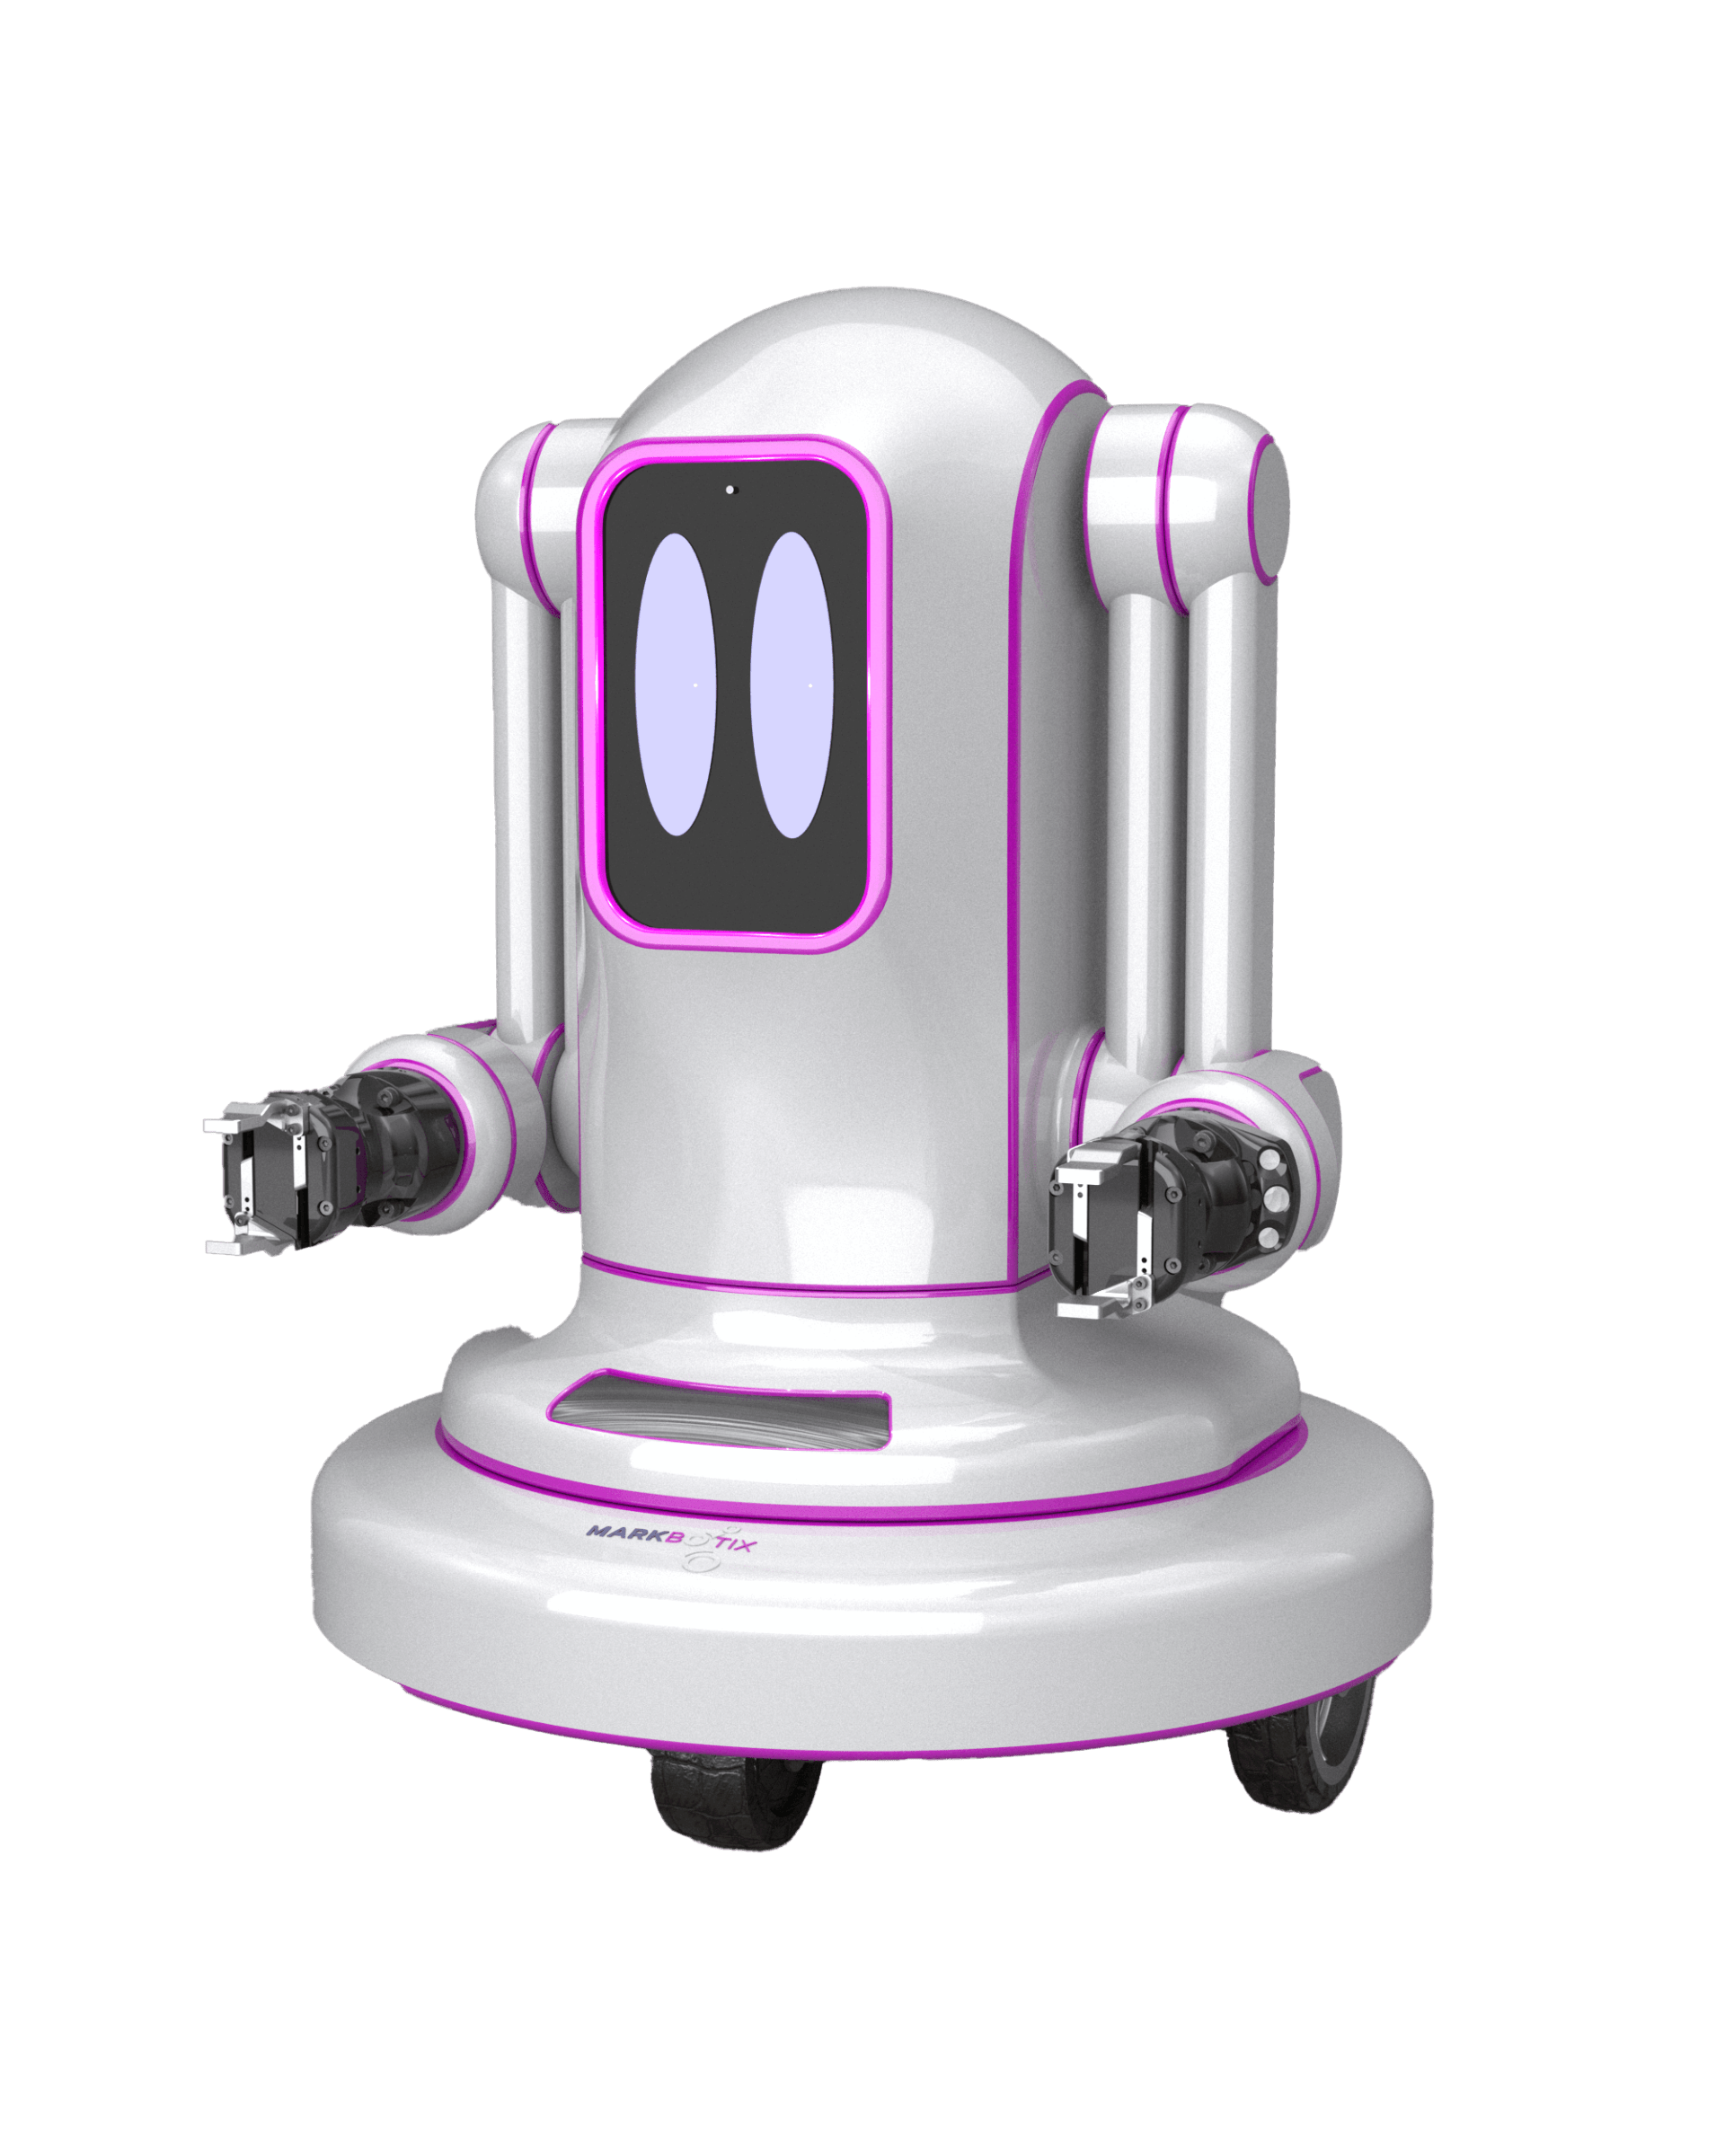 GRACE Robot by Markbotix